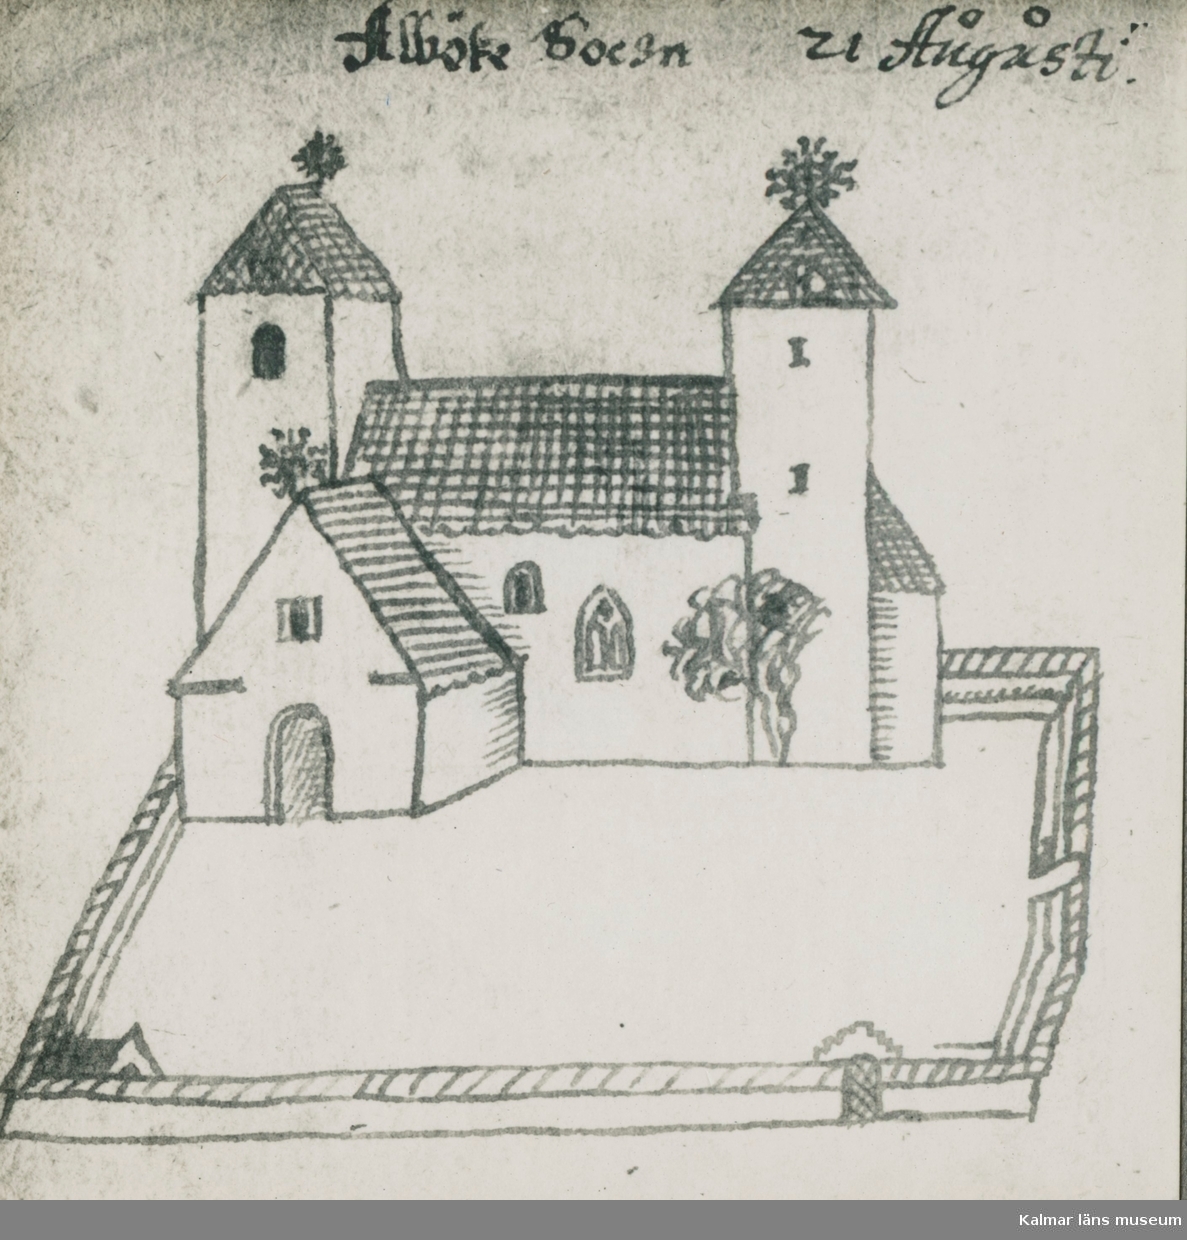 Alböke kyrka. Petrus Törnewall teckning efter Johannes Haquini Rhezelius.
Troligen tecknad 1673.